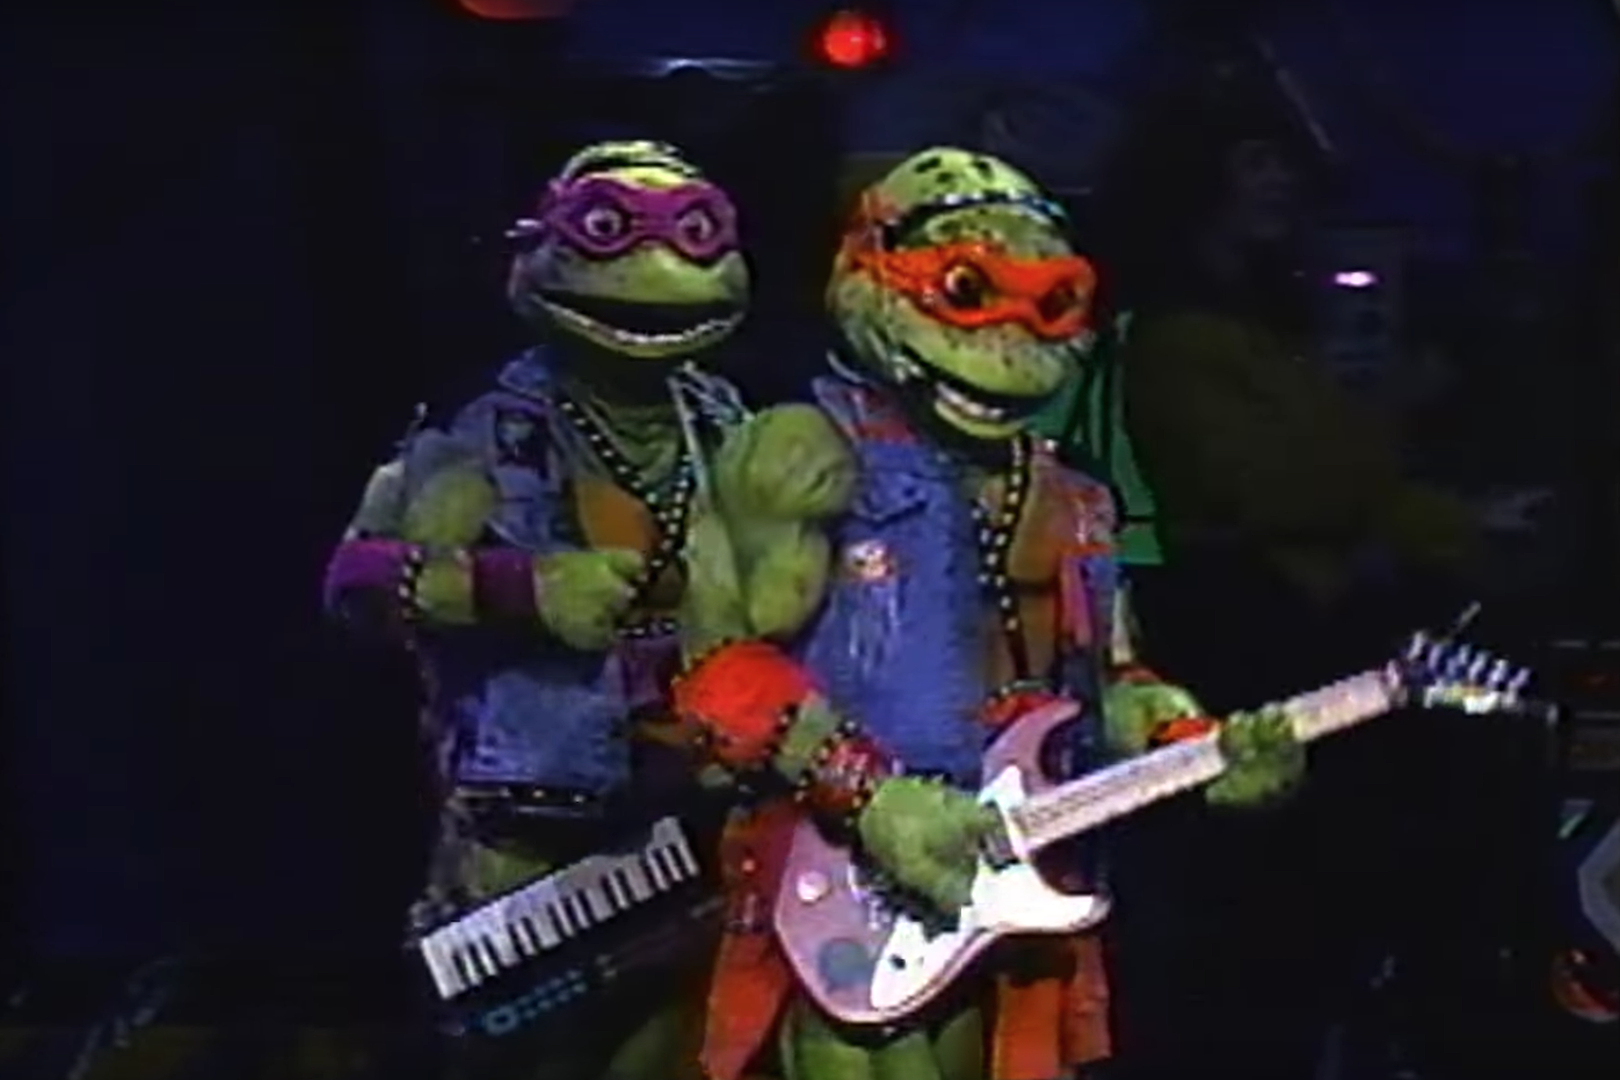 https://townsquare.media/site/366/files/2019/12/Teenage-Mutant-Ninja-Turtles-Band.png